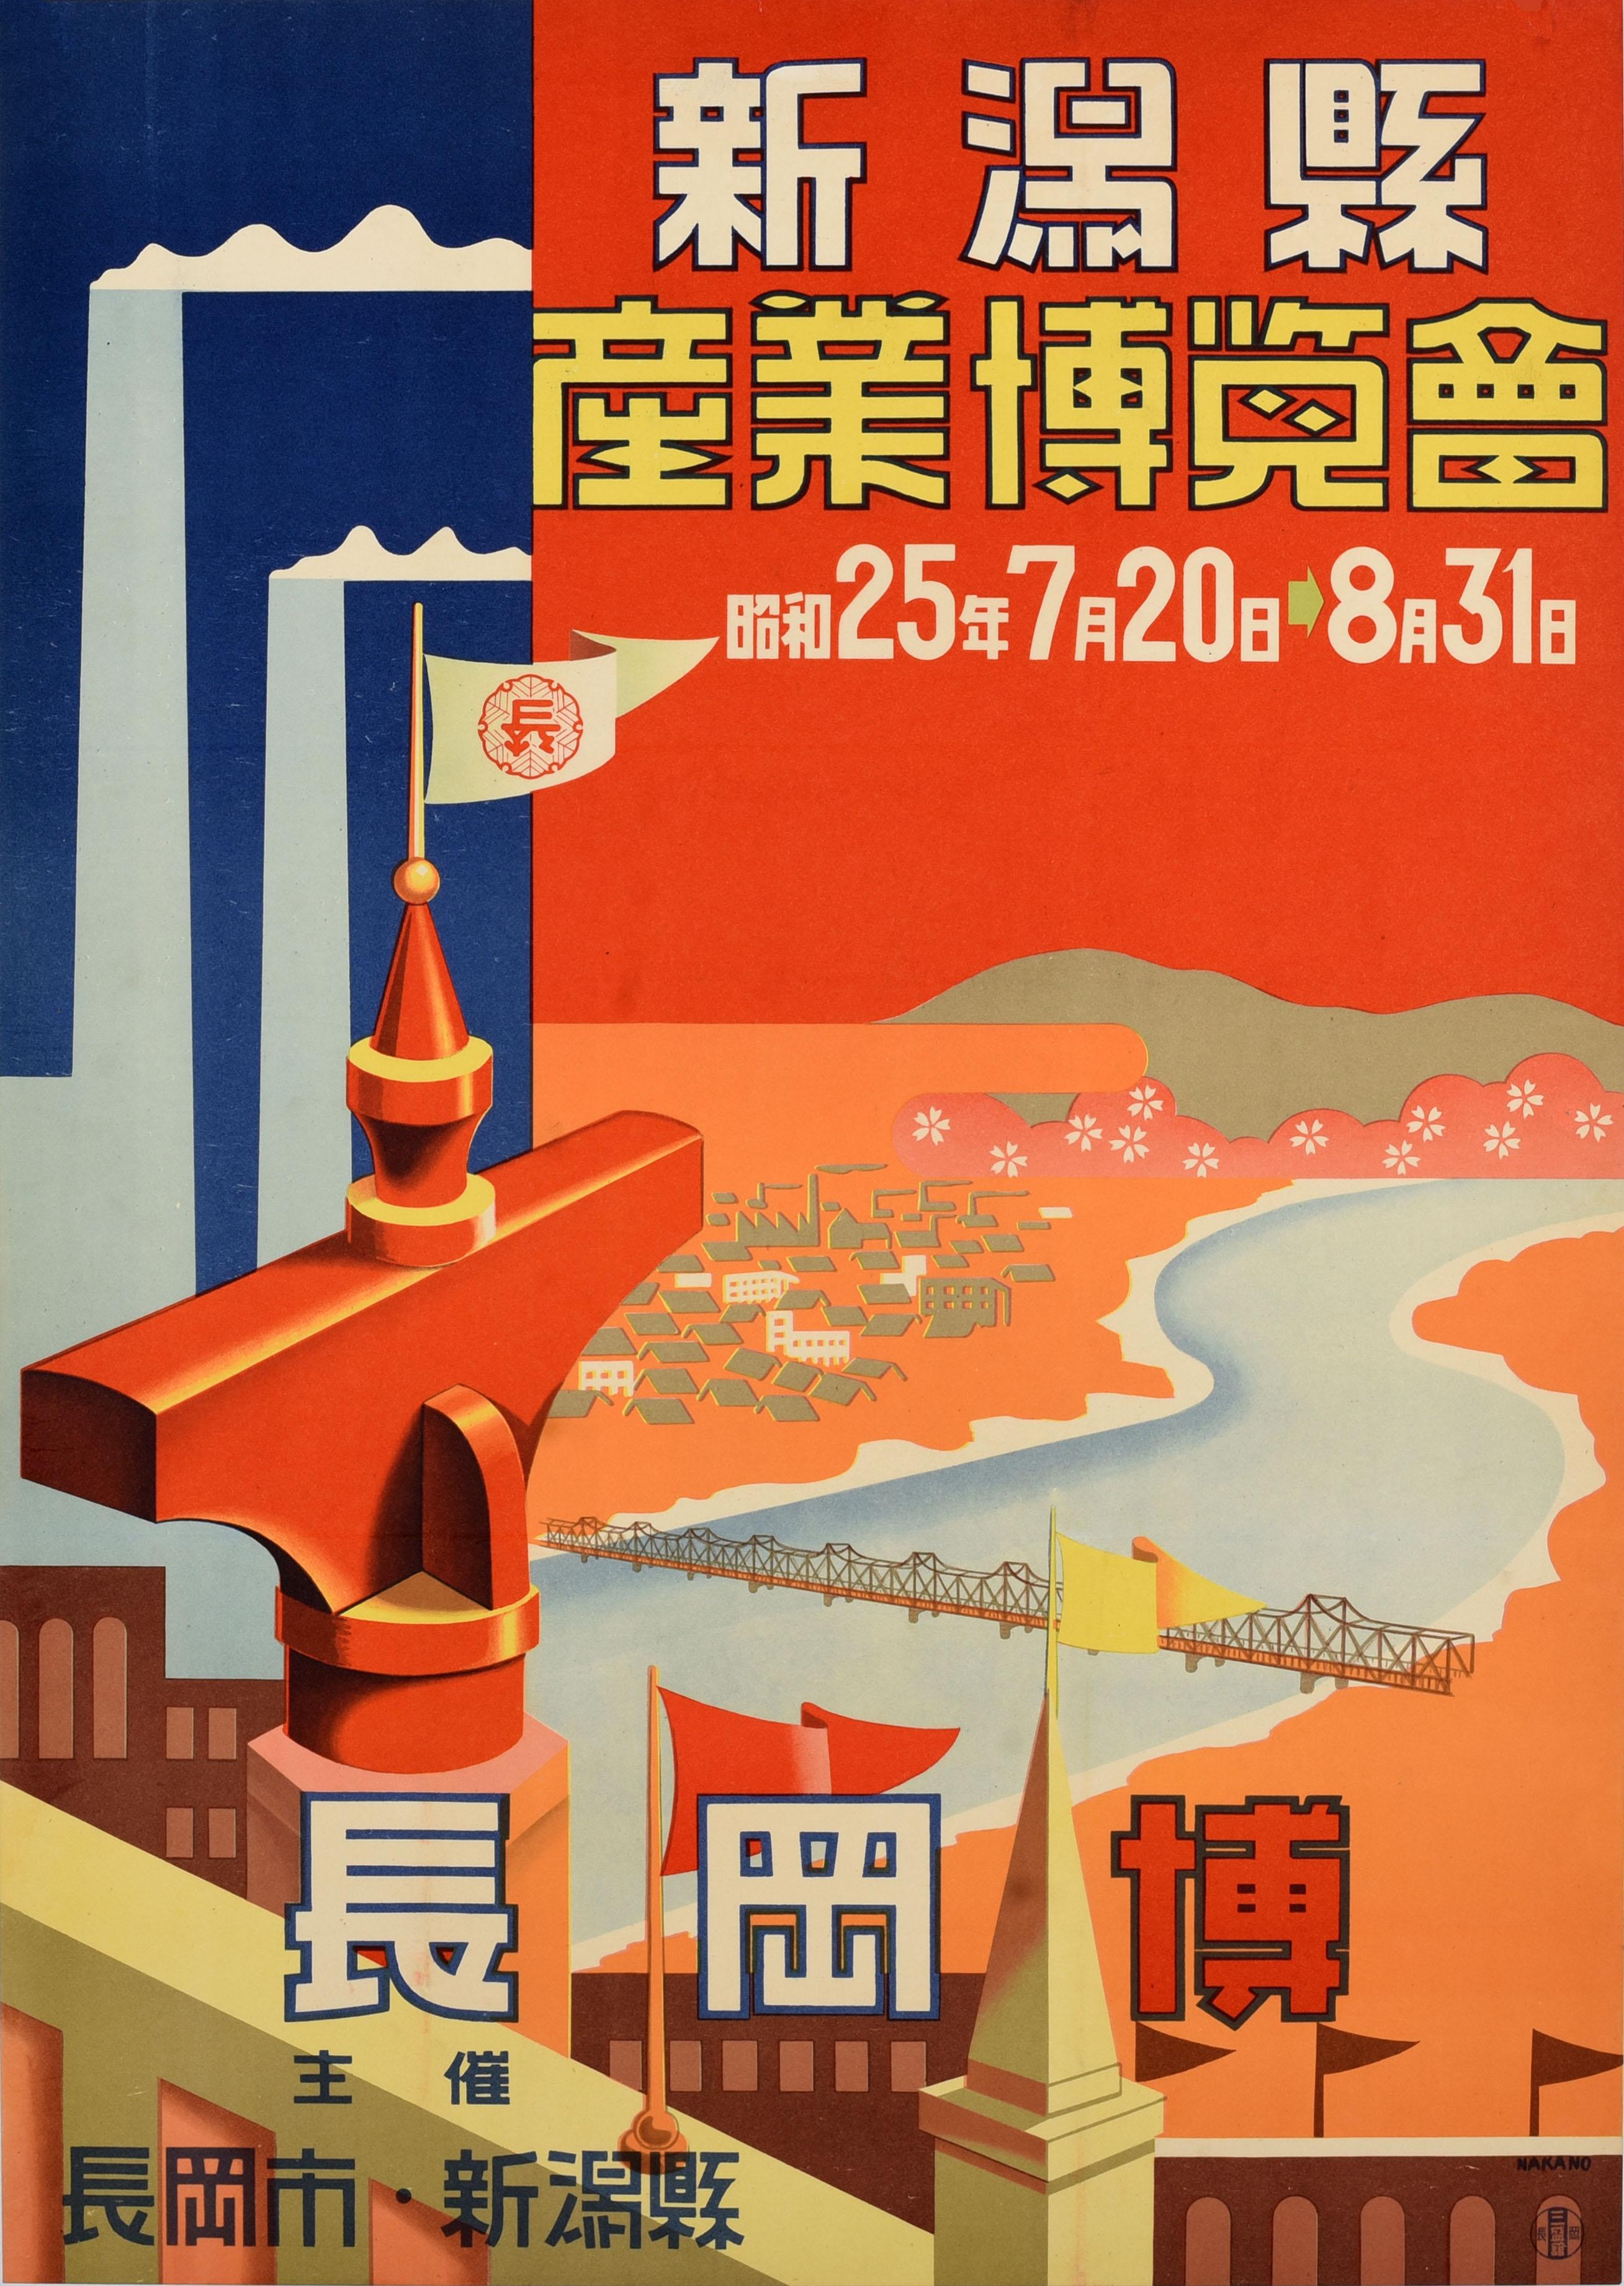 Unknown Print - Original Vintage Asia Travel Advertising Poster Niigata Industry Expo Japan